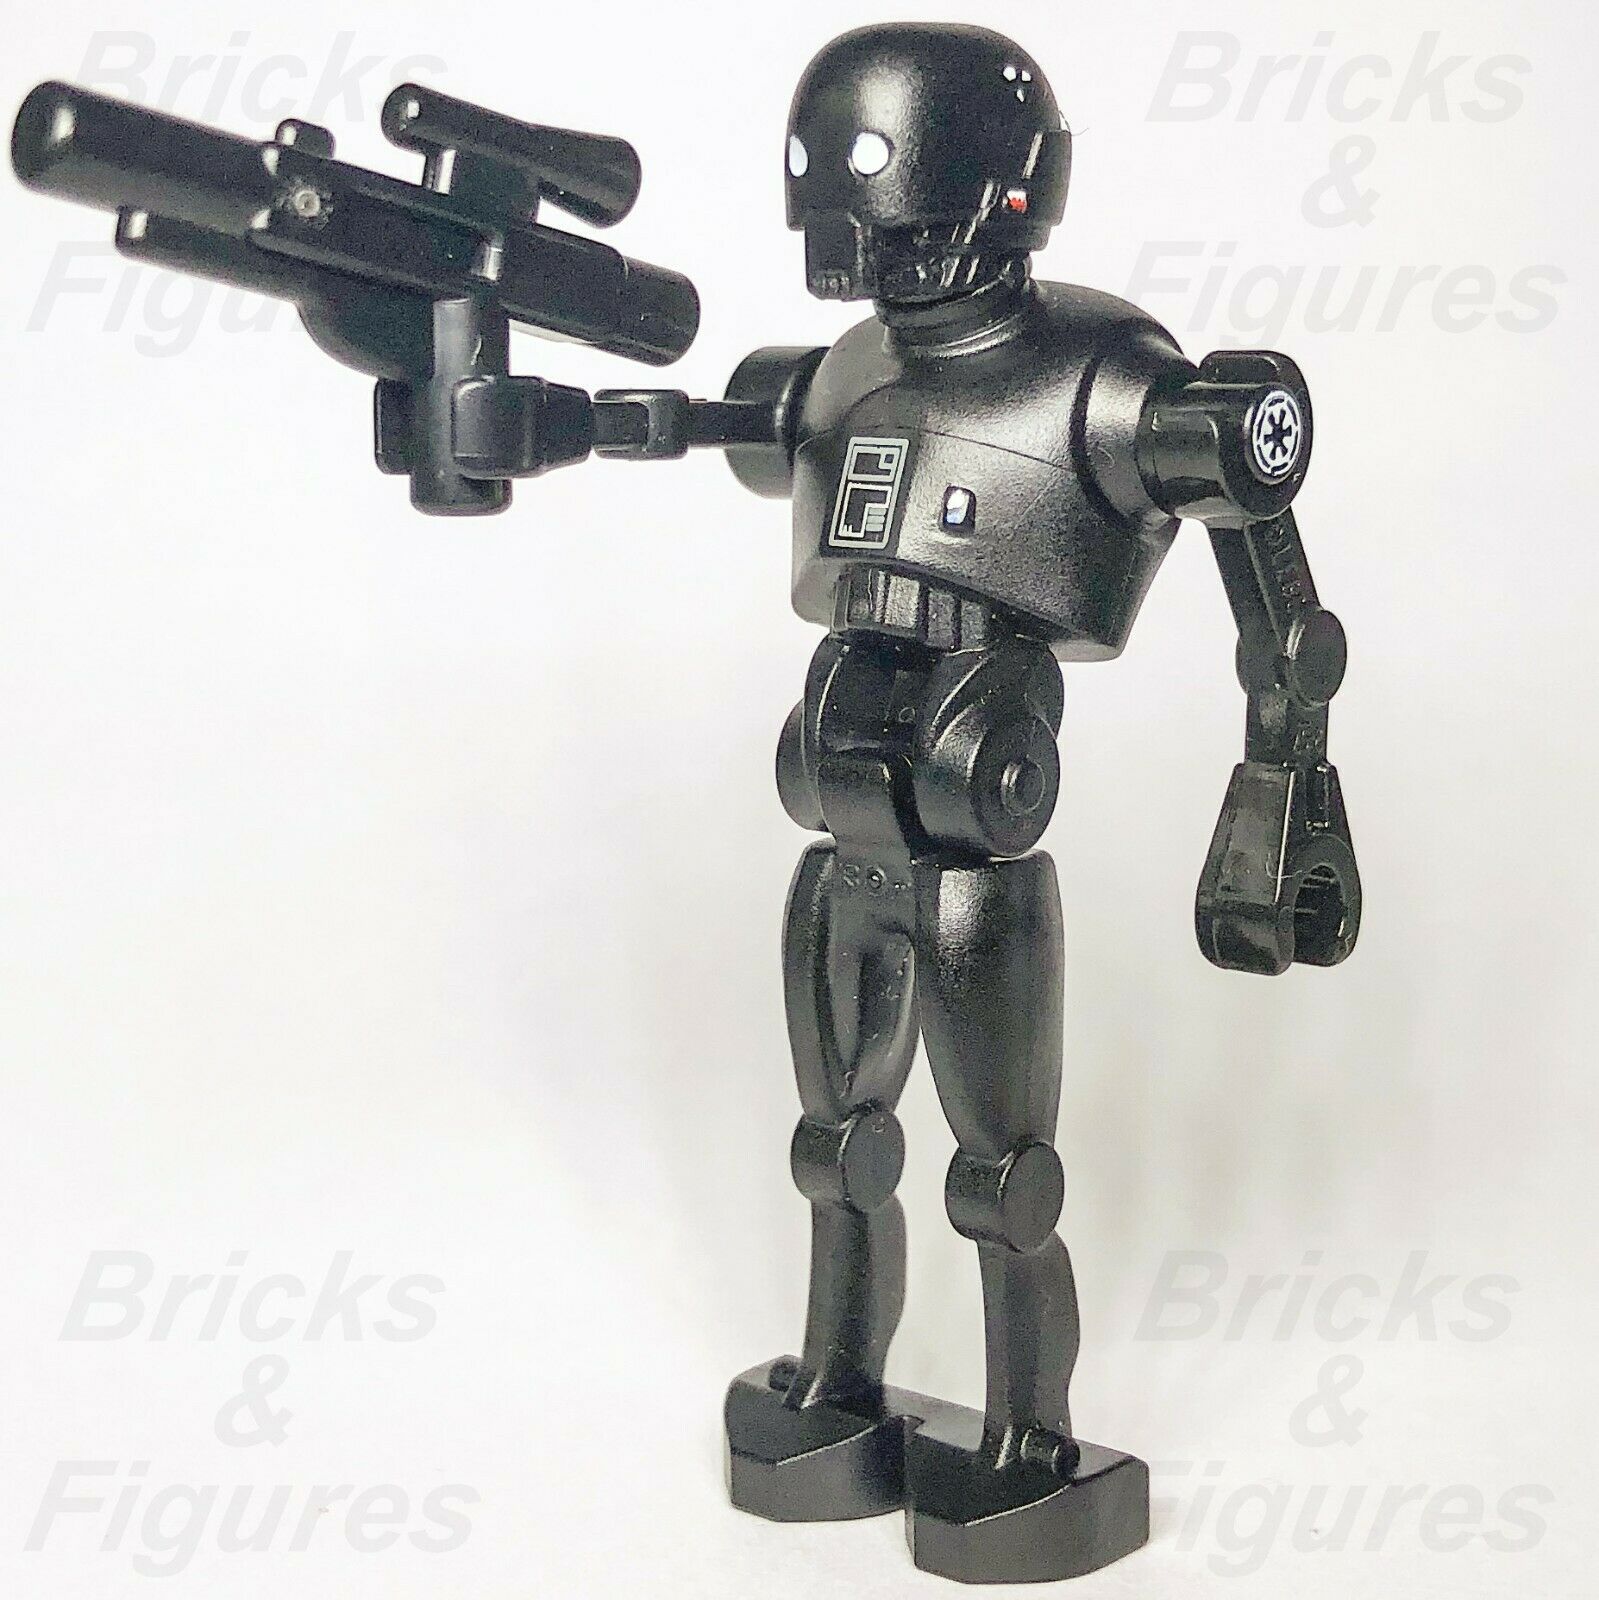 New Star Wars LEGO K-2SO Security Droid KX-Series Rogue One Minifigure 75156 - Bricks & Figures